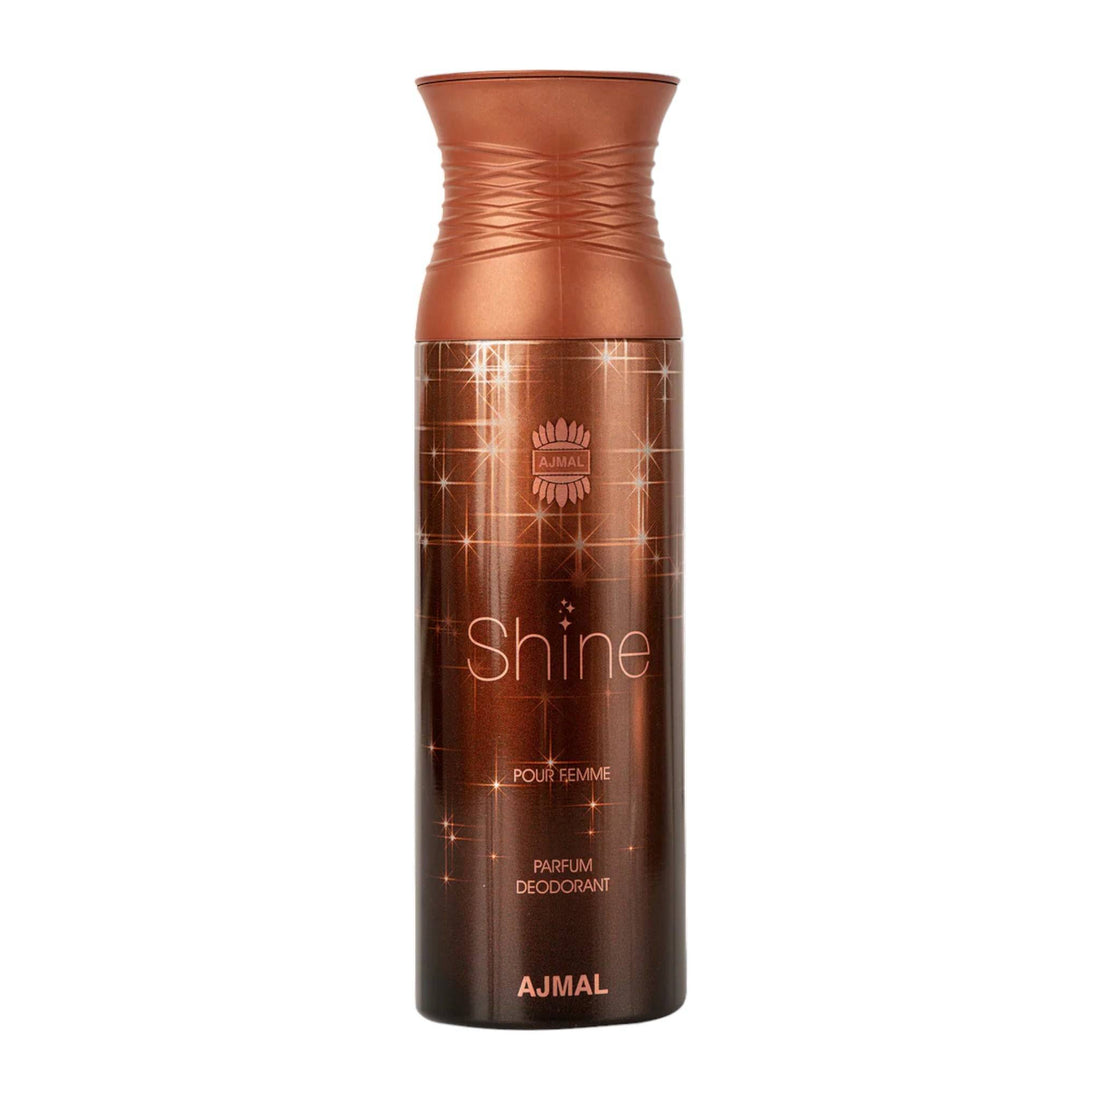 Elegant bottle of Ajmal Shine Deodorant 200ml, showcasing its sleek design and the sparkling essence of the fragrance.